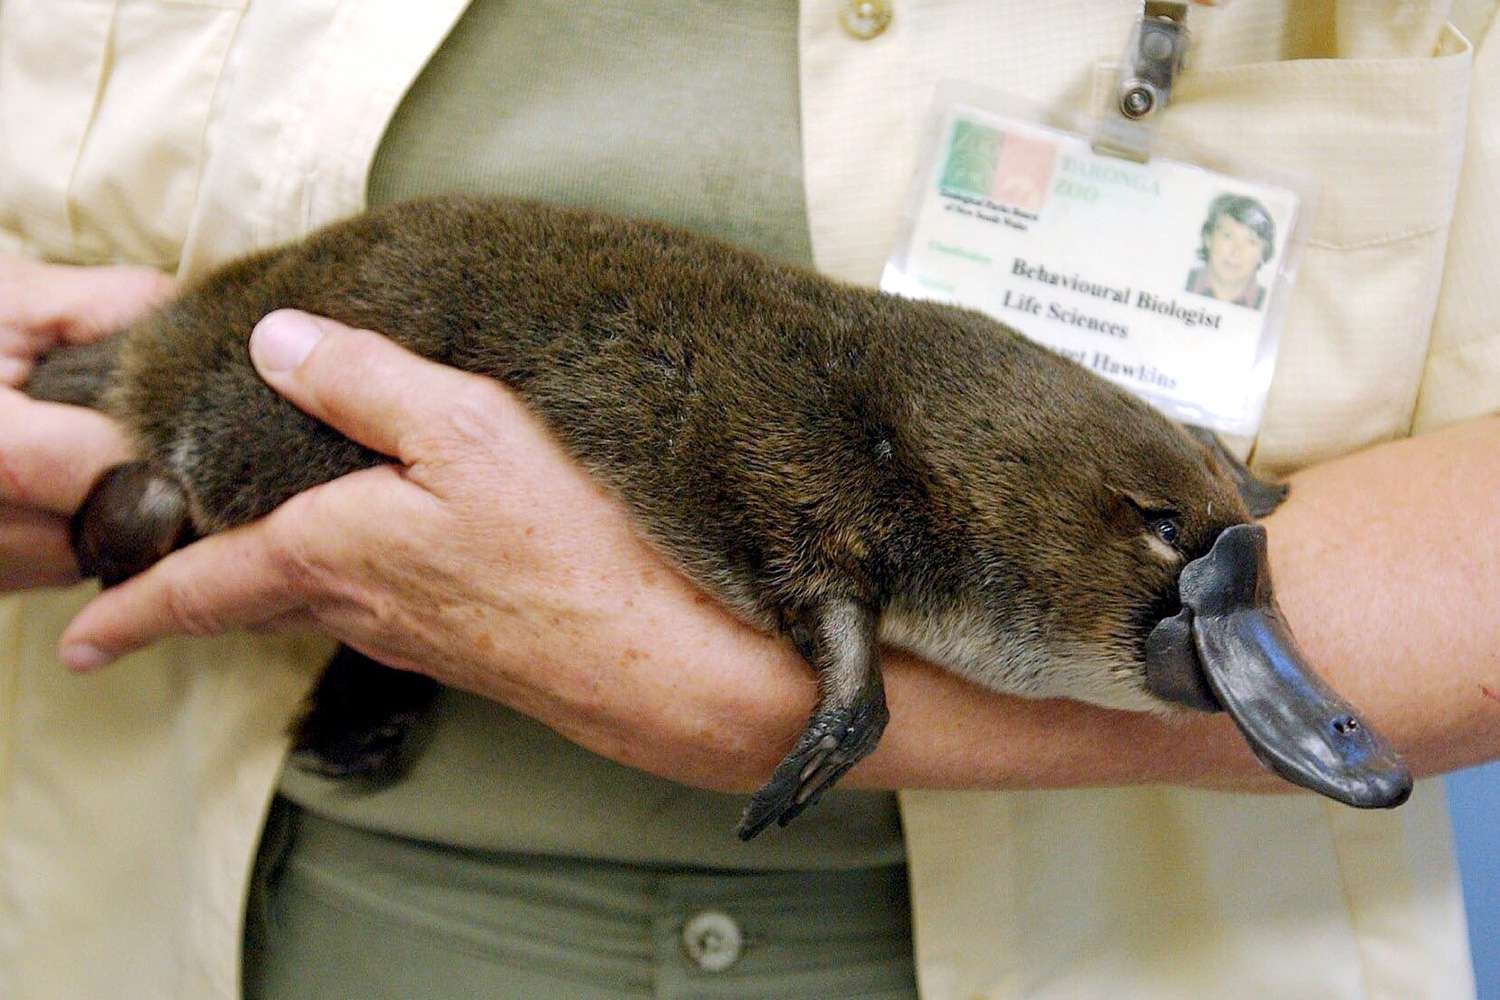 Scientists Fear Platypuses Could Go Extinct Australia Climate | PEOPLE.com